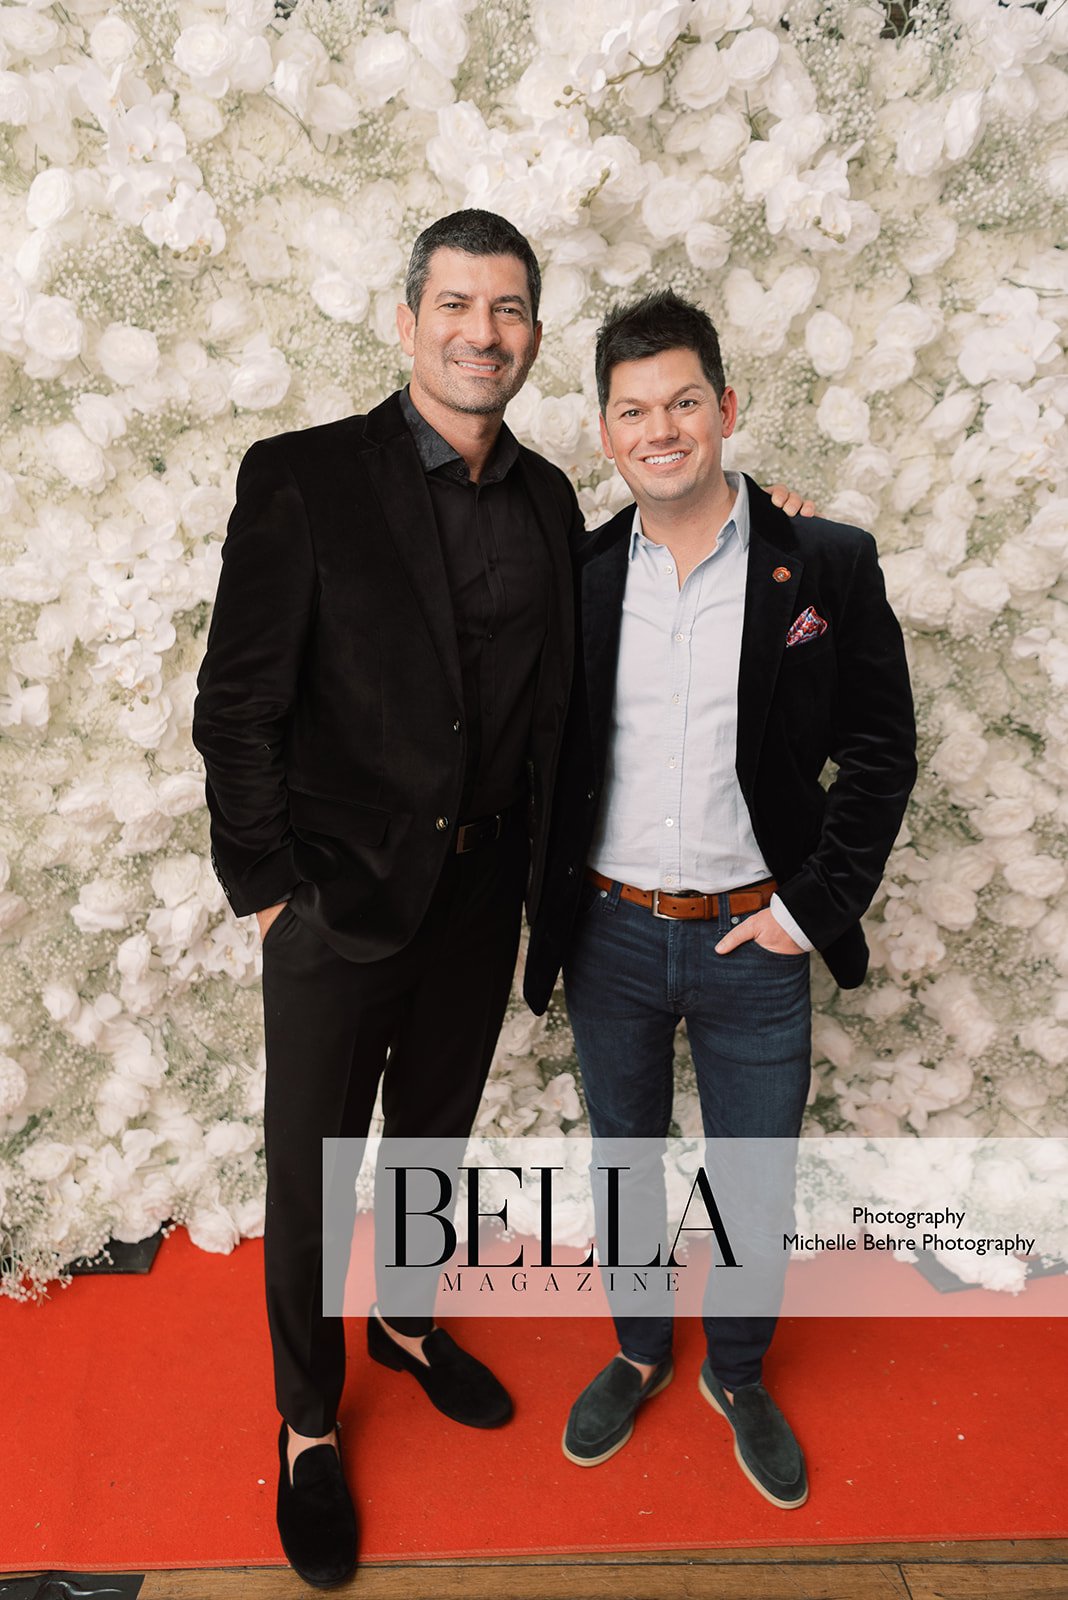 Michelle-Behre-Photography-BELLA-Magazine-Wedding-Event-La-Pulperia-New-York-118.jpg